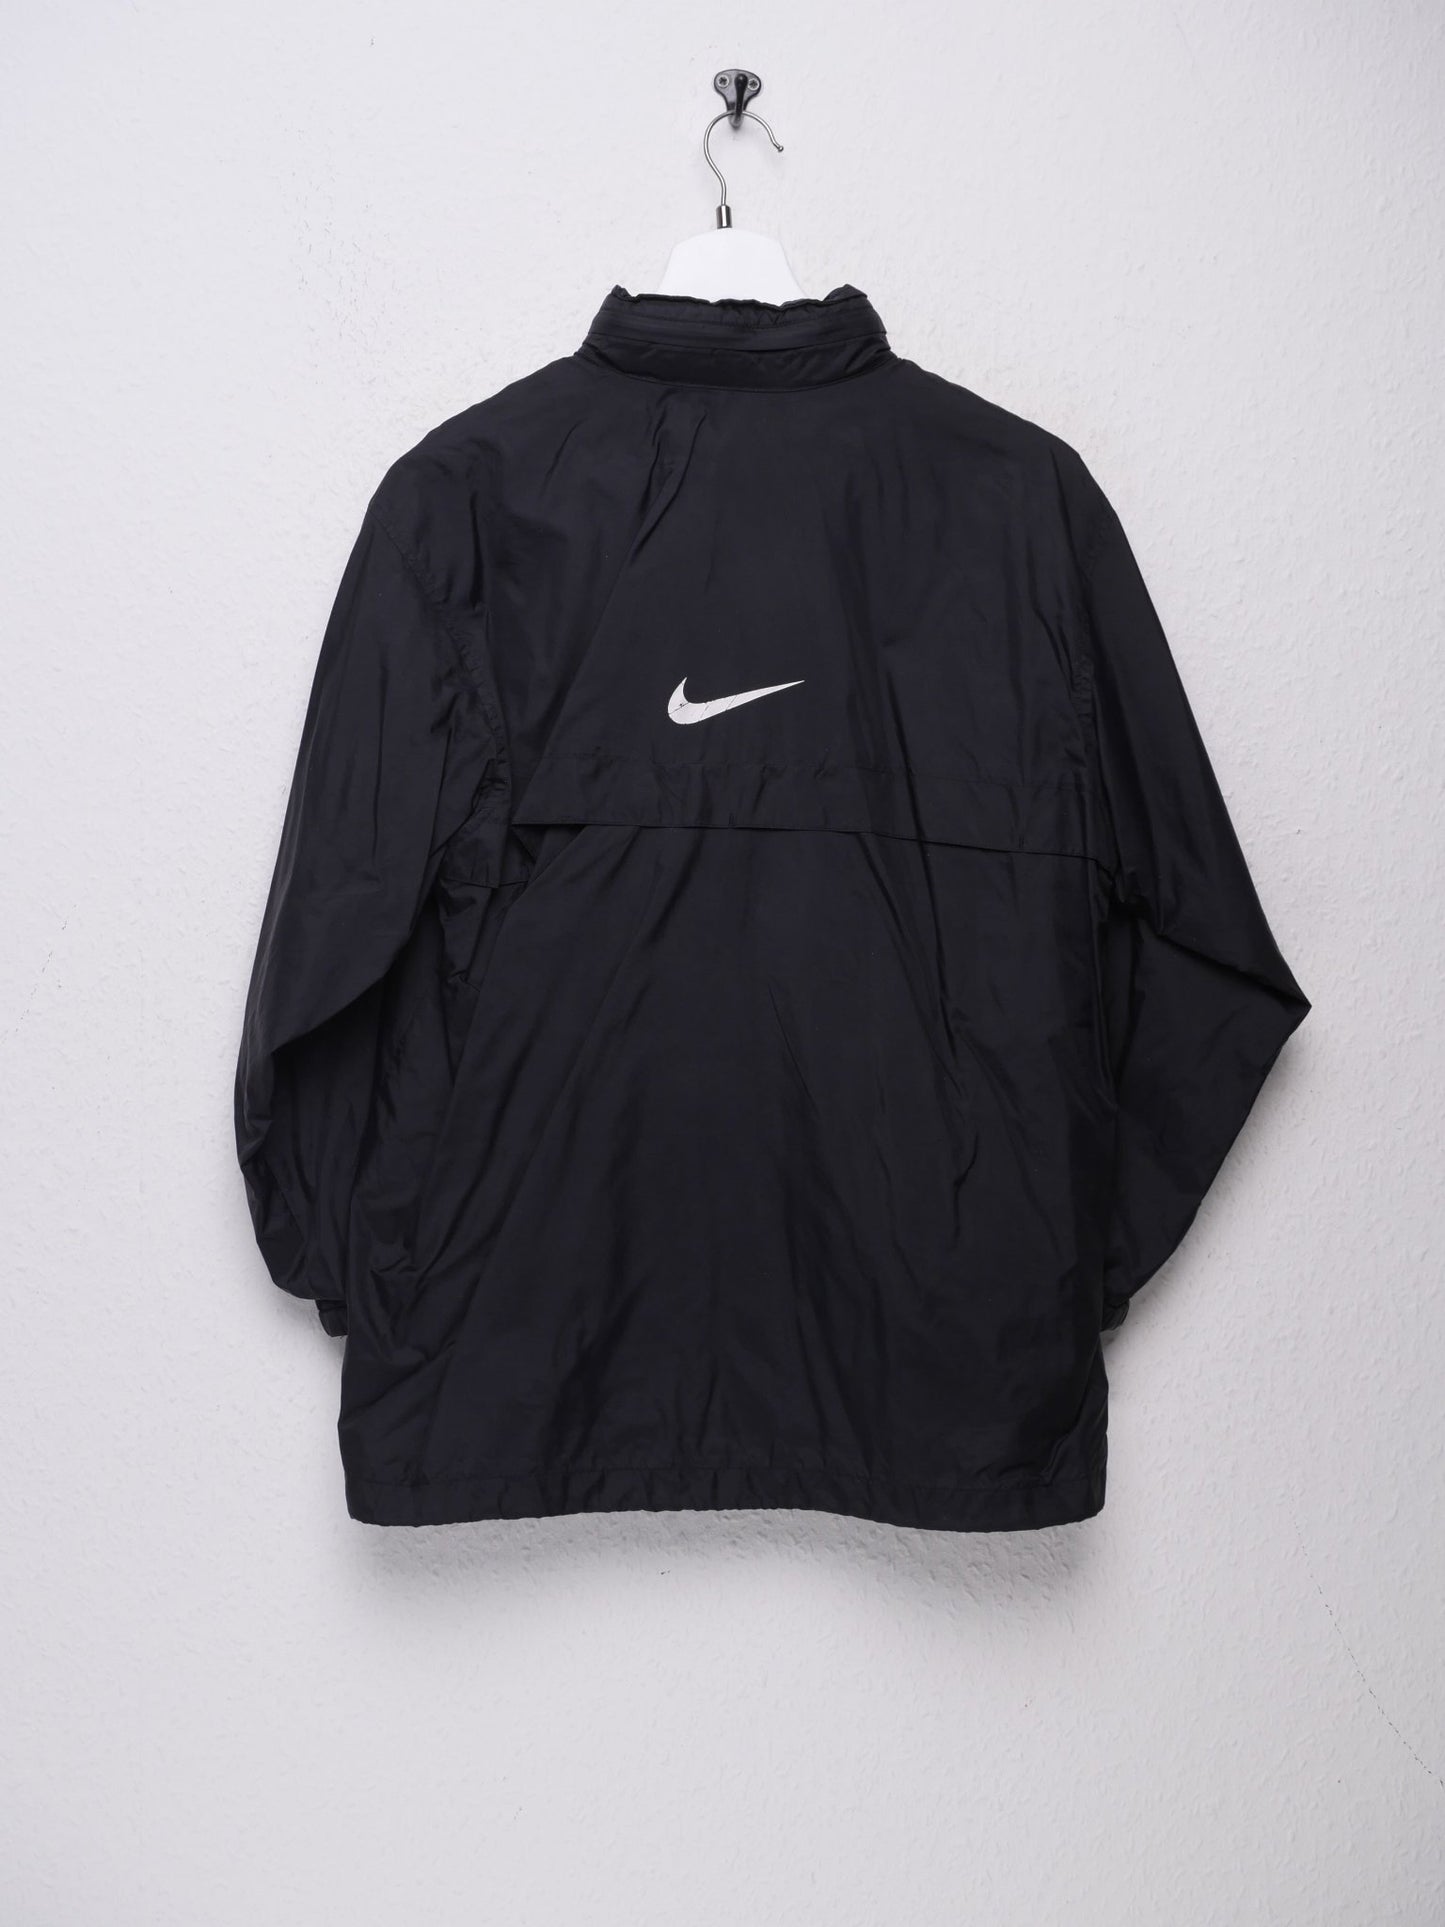 Nike printed Logo black Track Jacket - Peeces